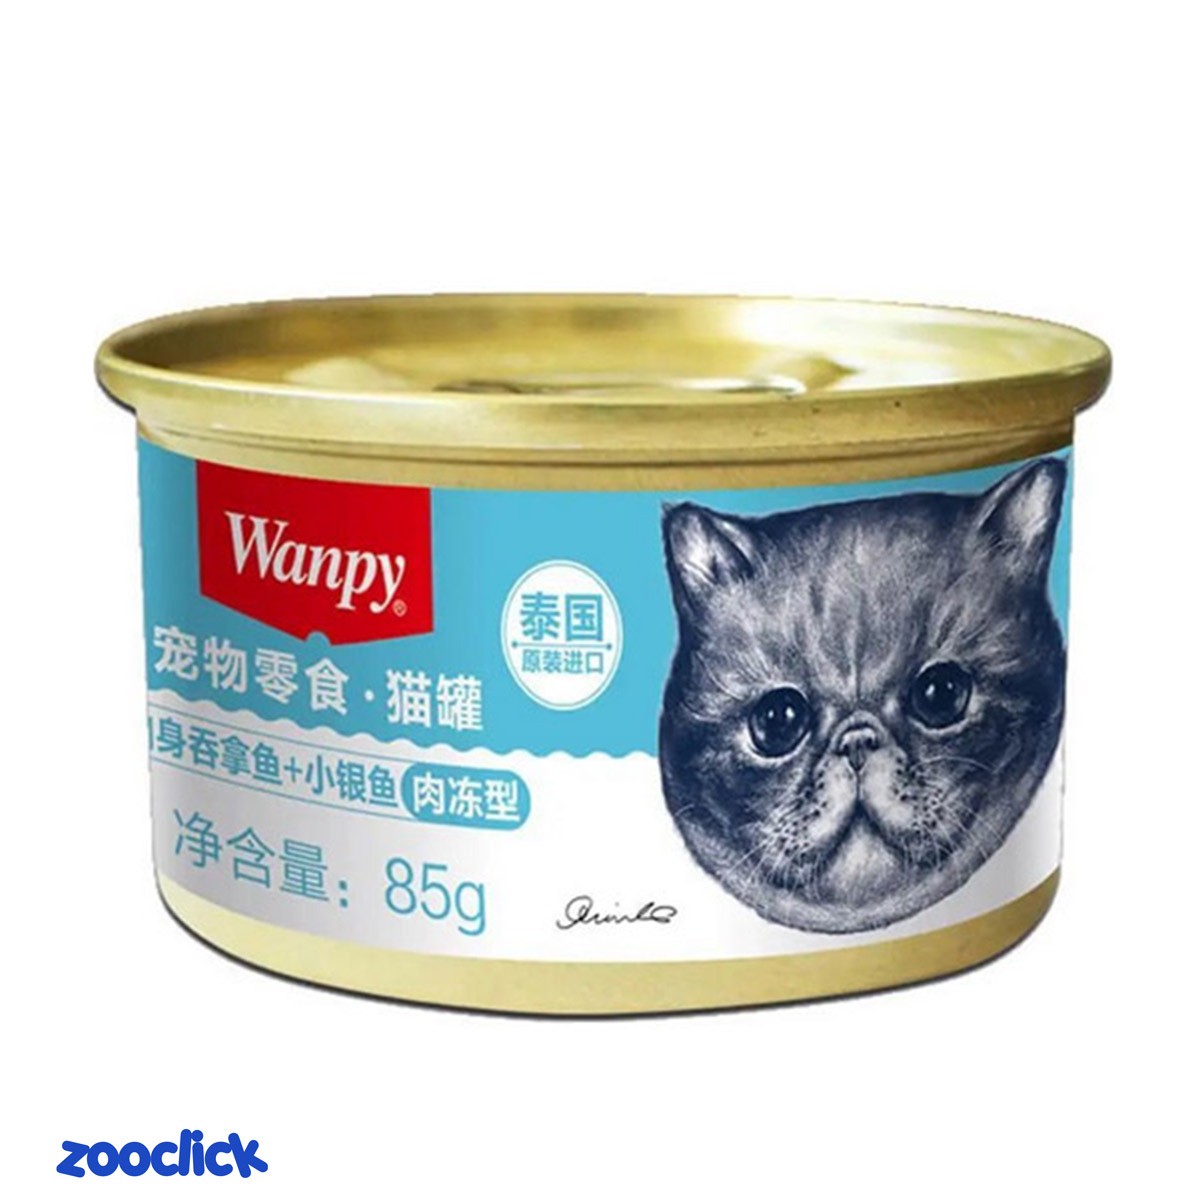 wanpy tuna کنسرو گربه ونپی با طعم ماهی تن